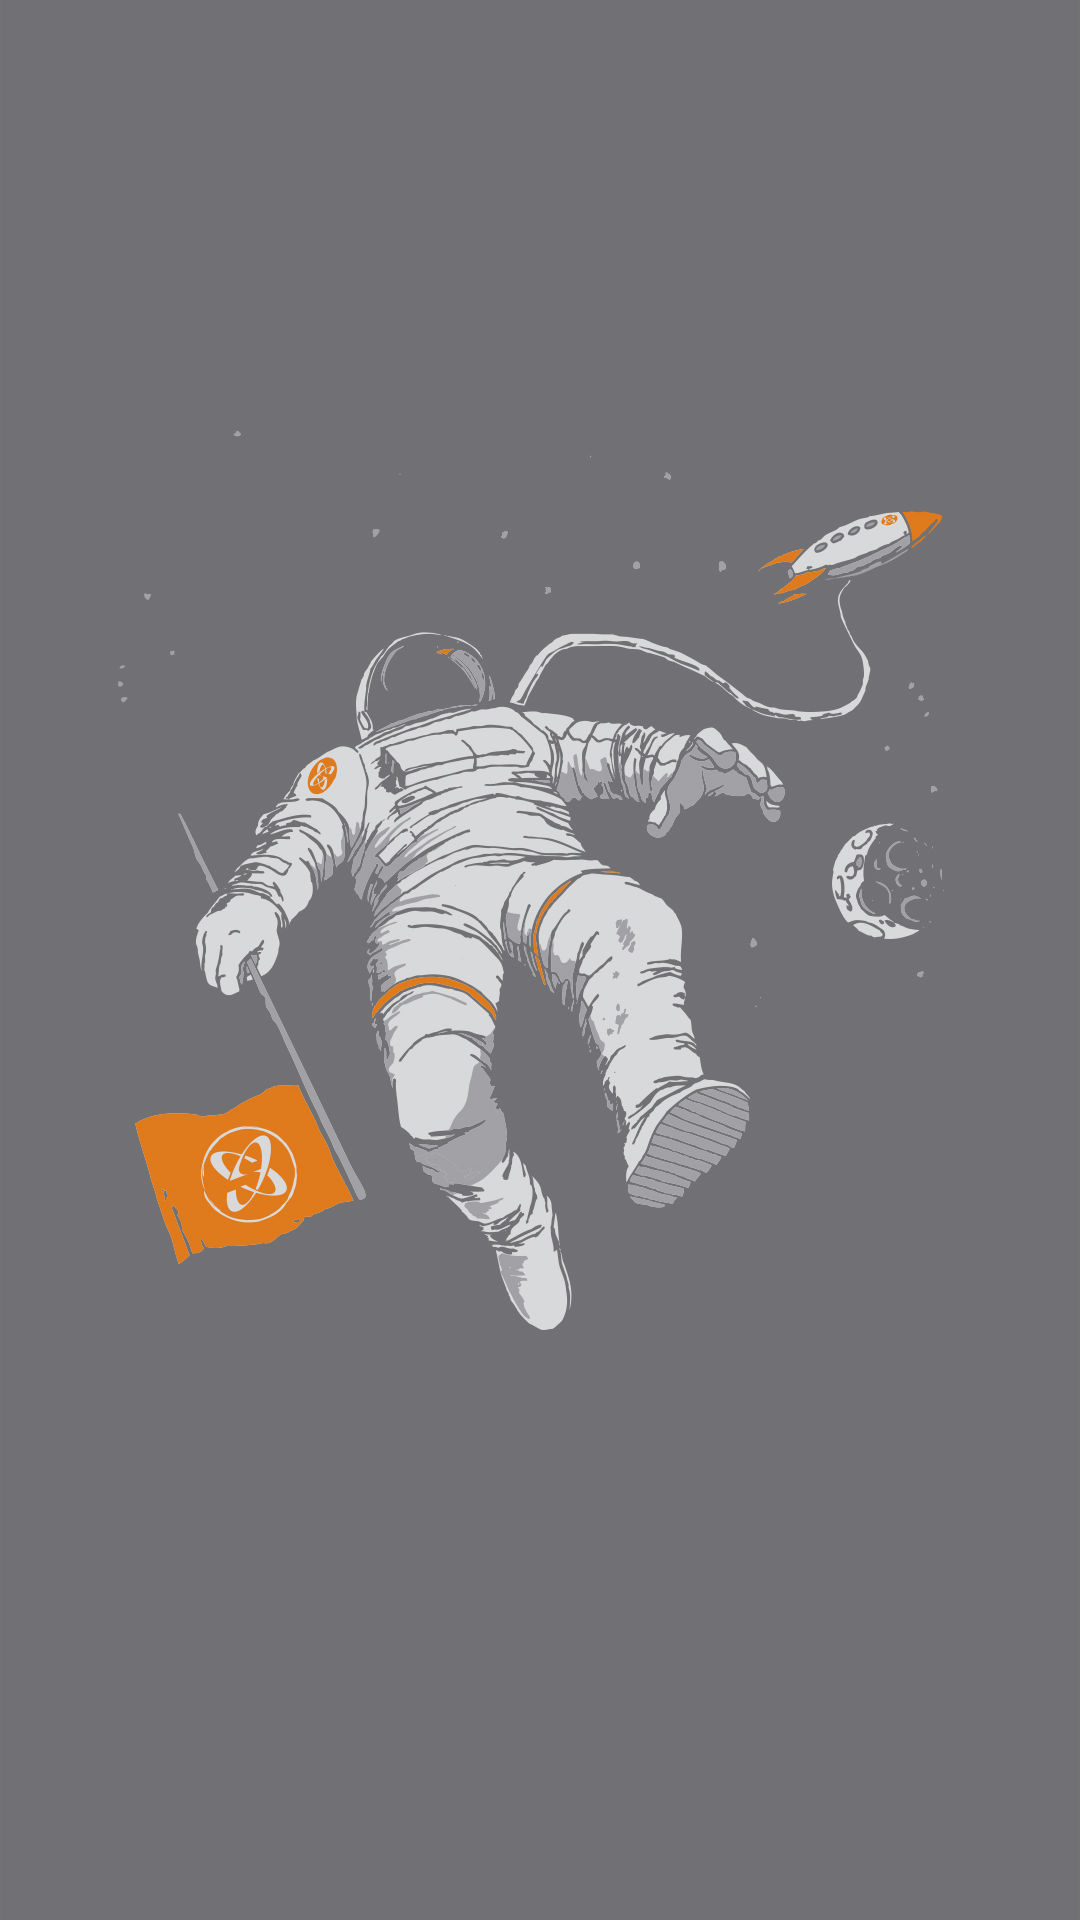 Download free astronaut iphone wallpaper